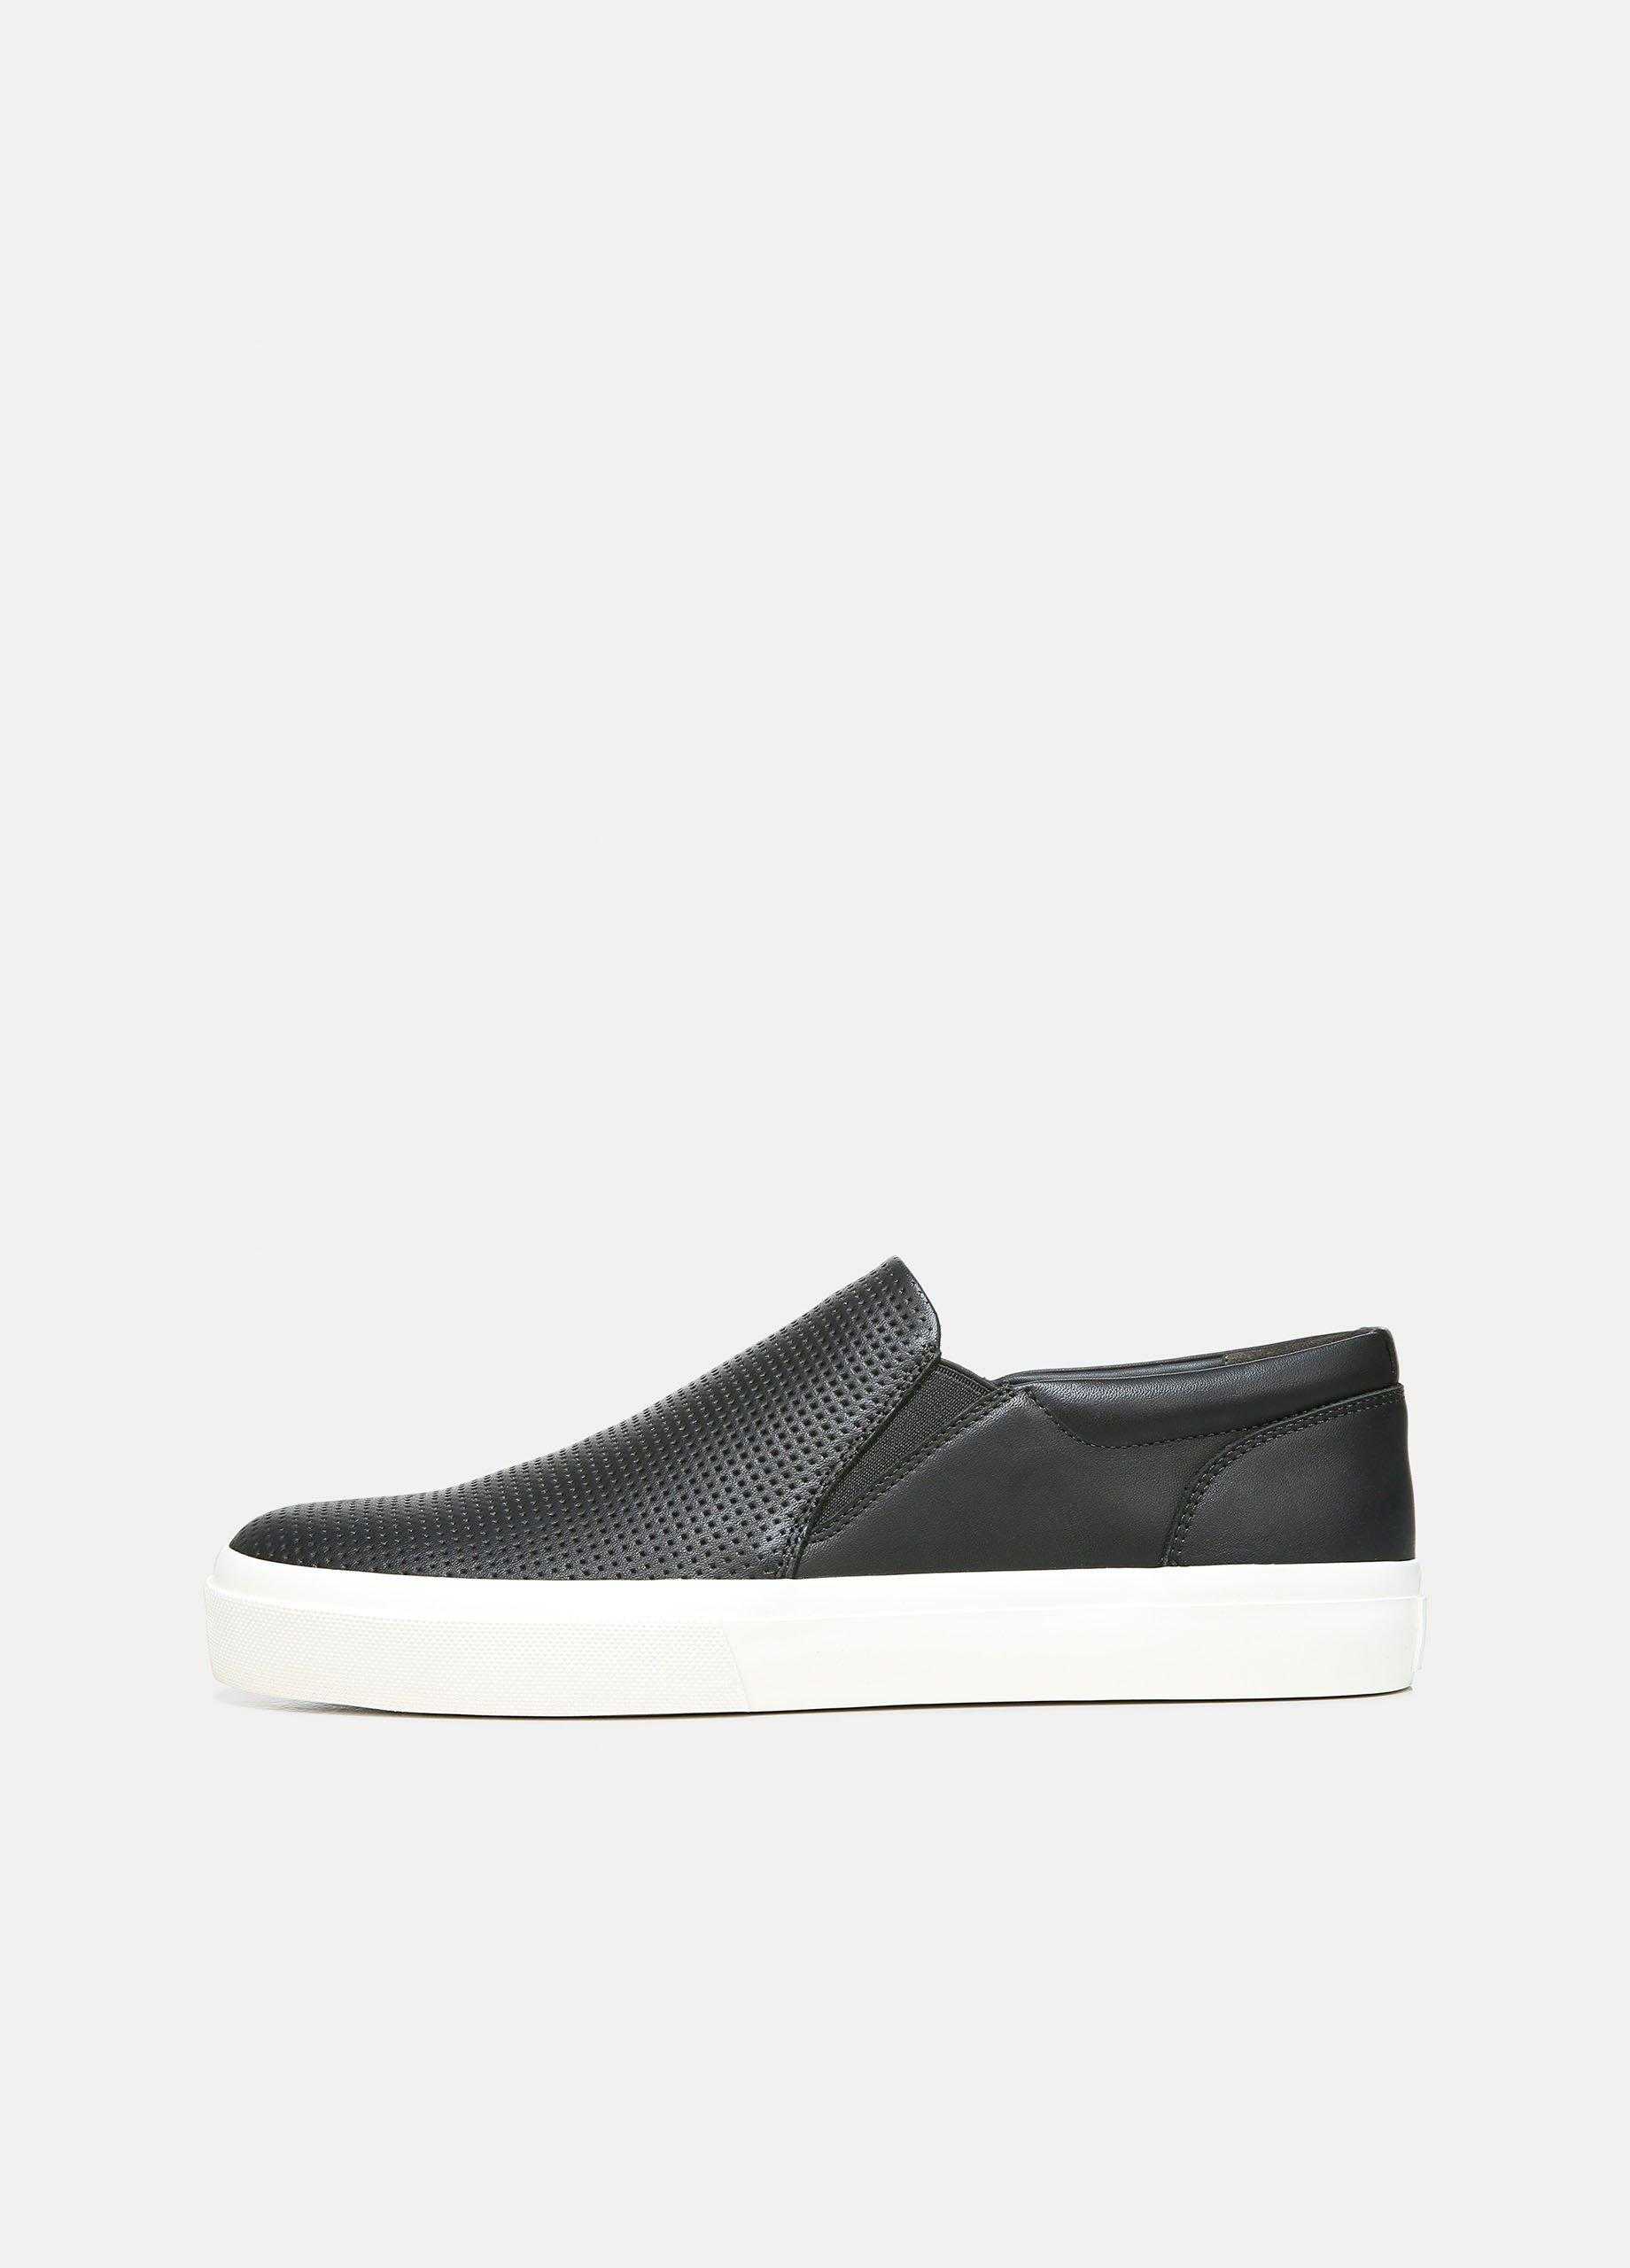 Fletcher Leather Sneaker, Black, Size 8 Vince